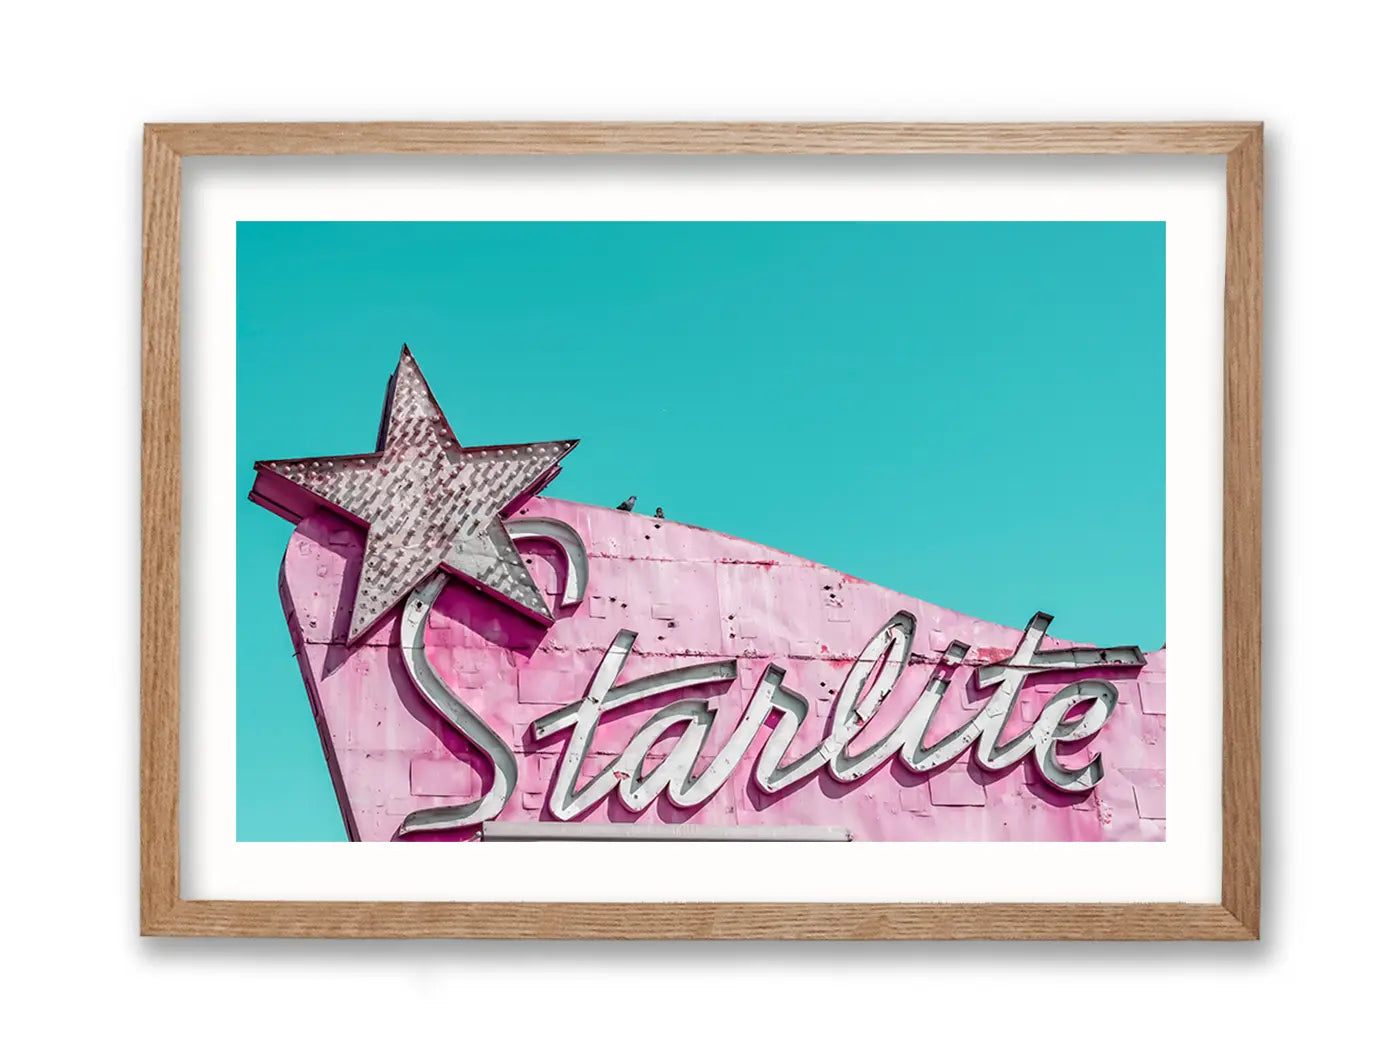 Starlite Drive-In